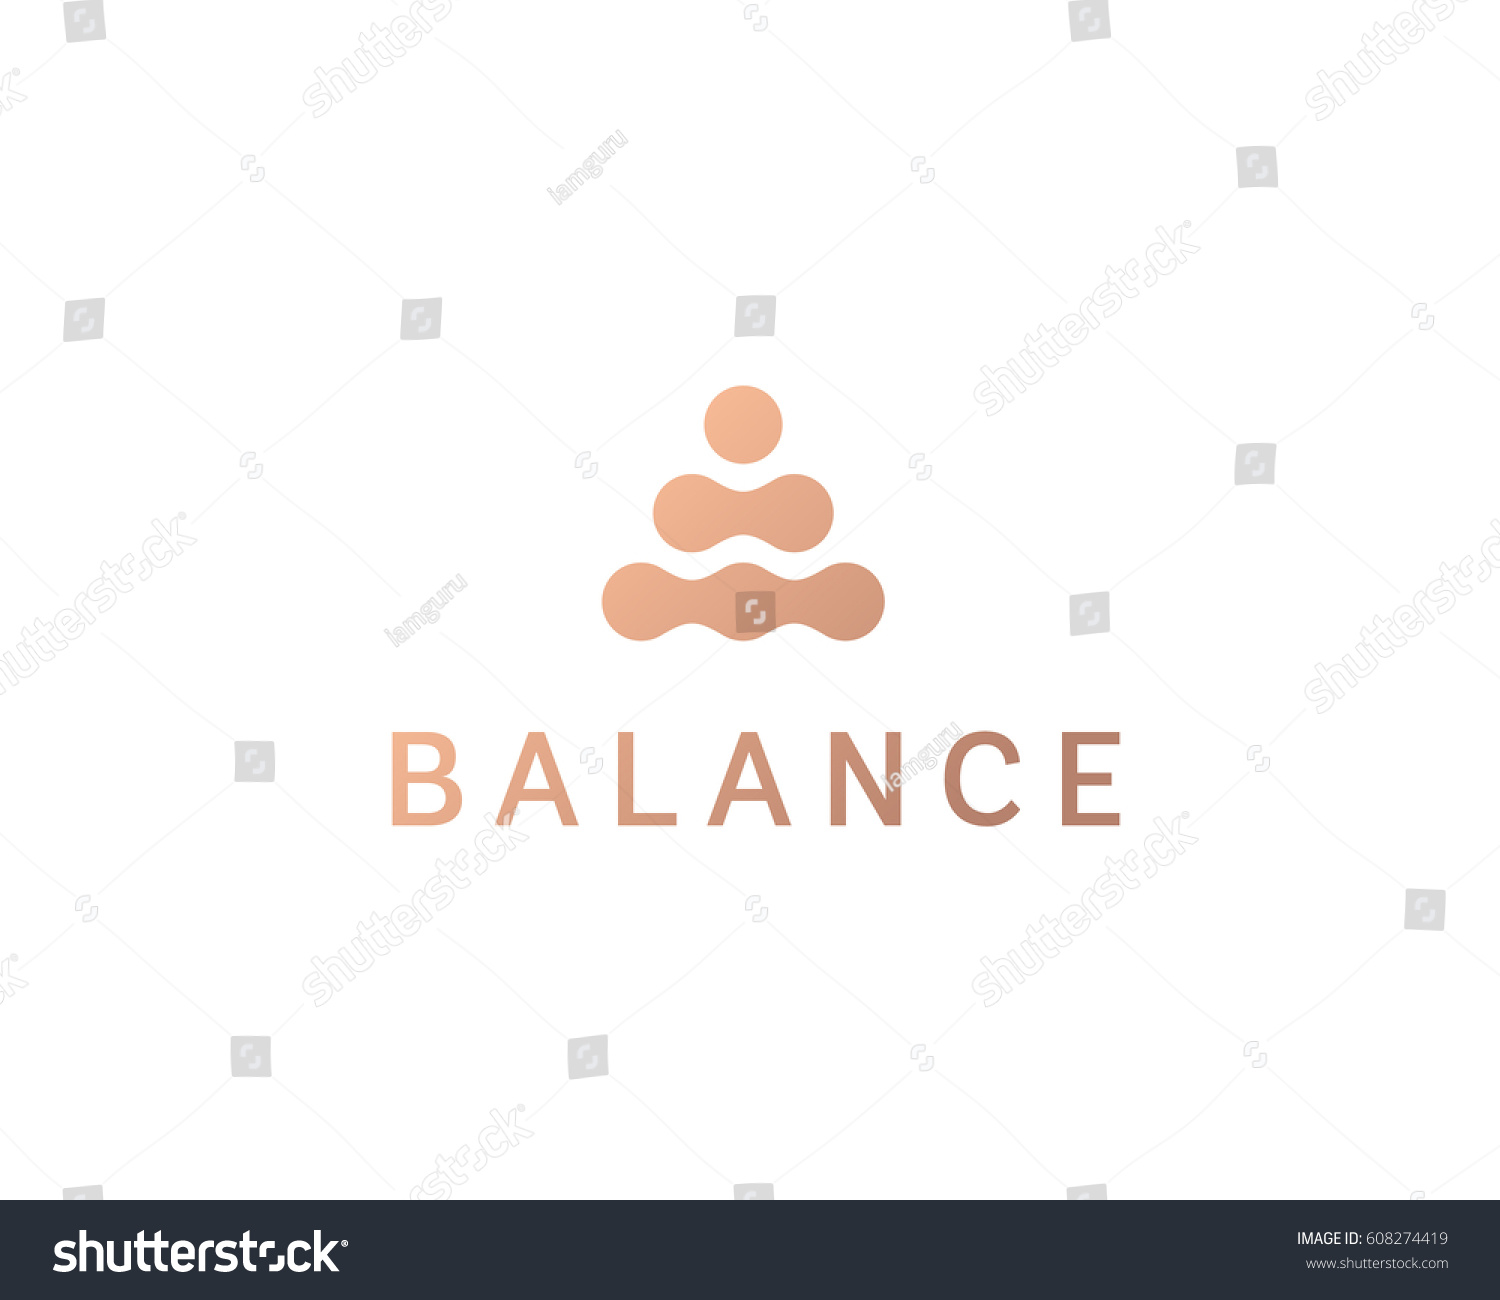 Abstract Balance Logo Design Template Spa Stock Illustration 608274419 ...